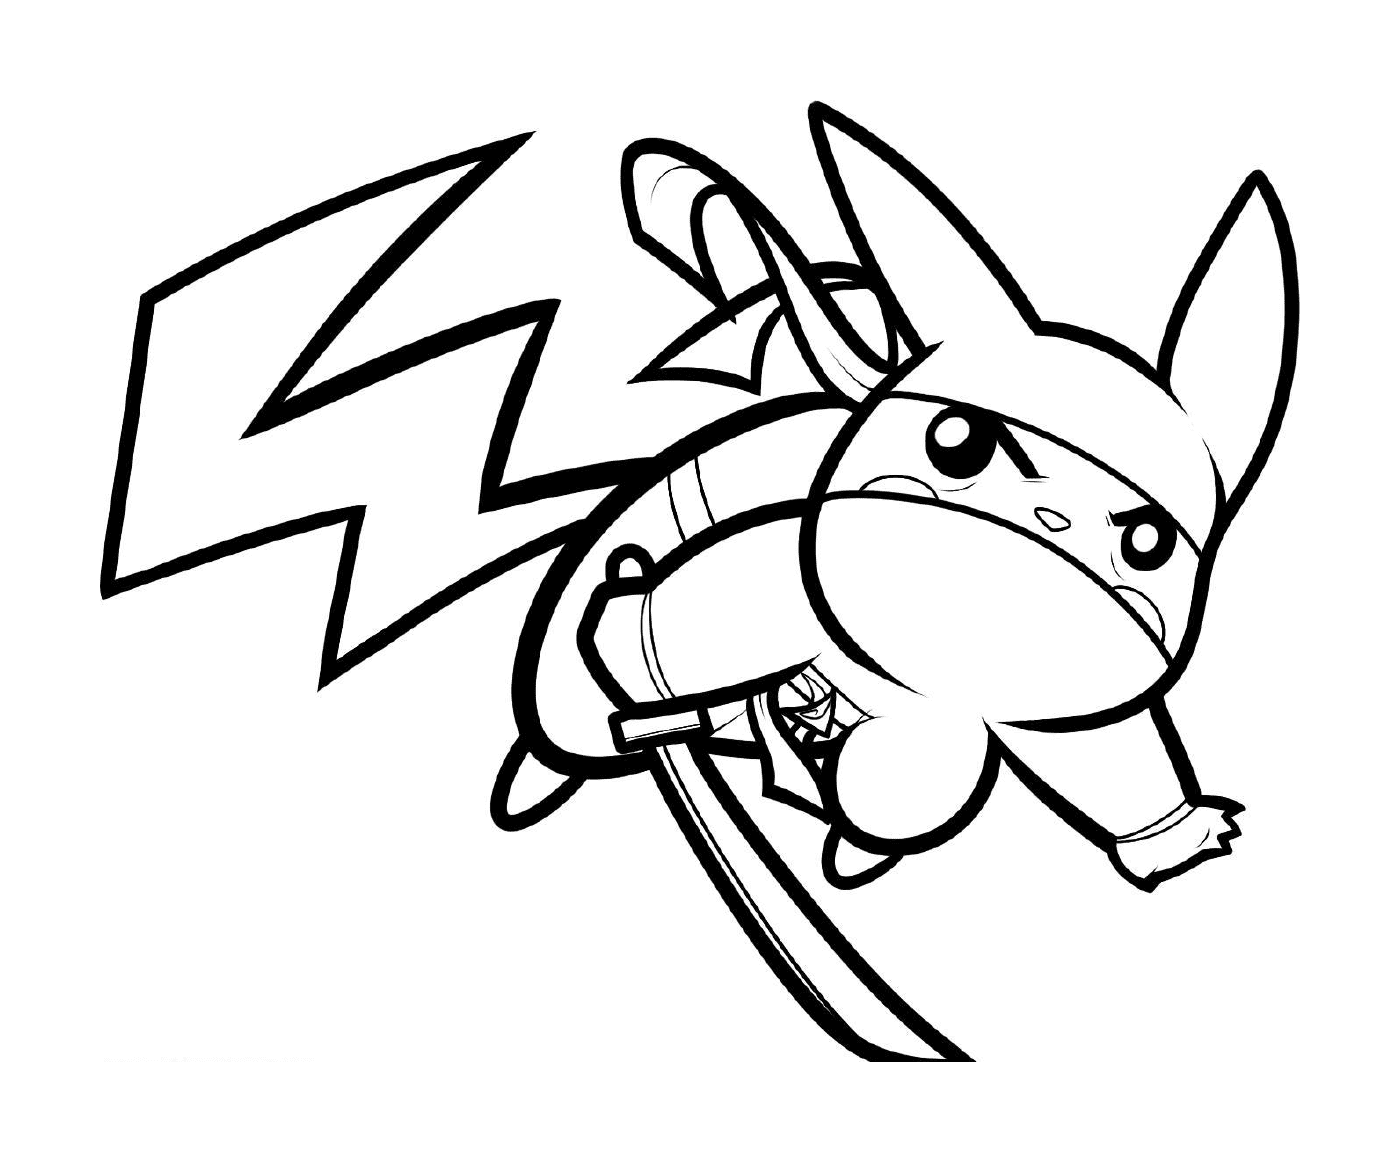  Pikachu, malizioso ninja attrezzato 